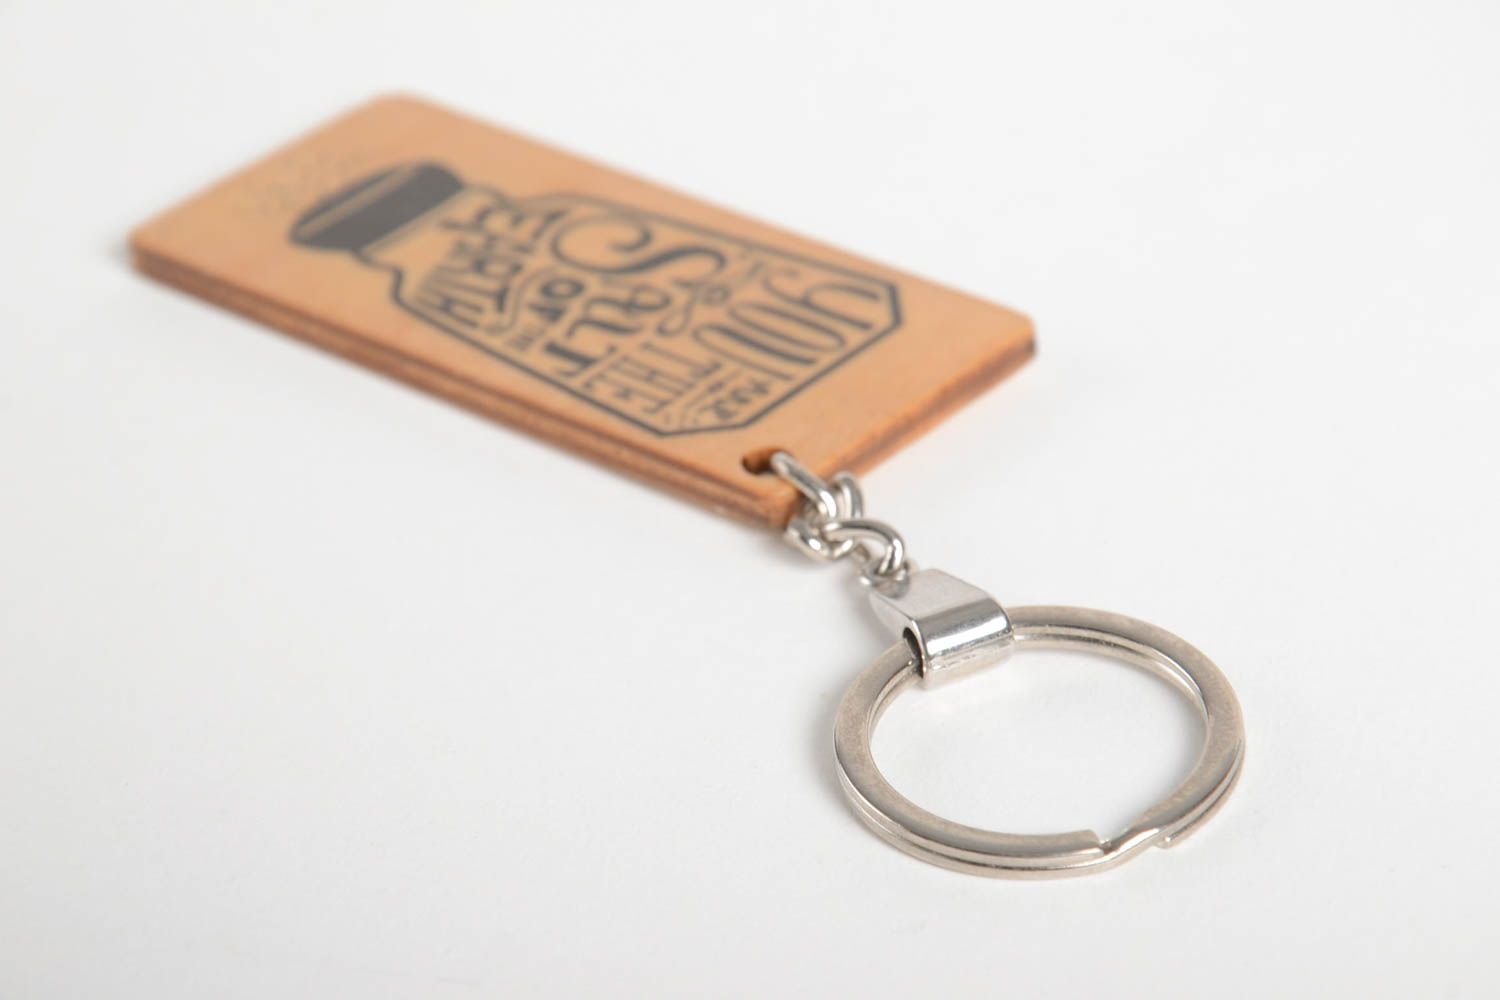 Handmade keychain wooden souvenir unusual keychain for men gift ideas photo 4